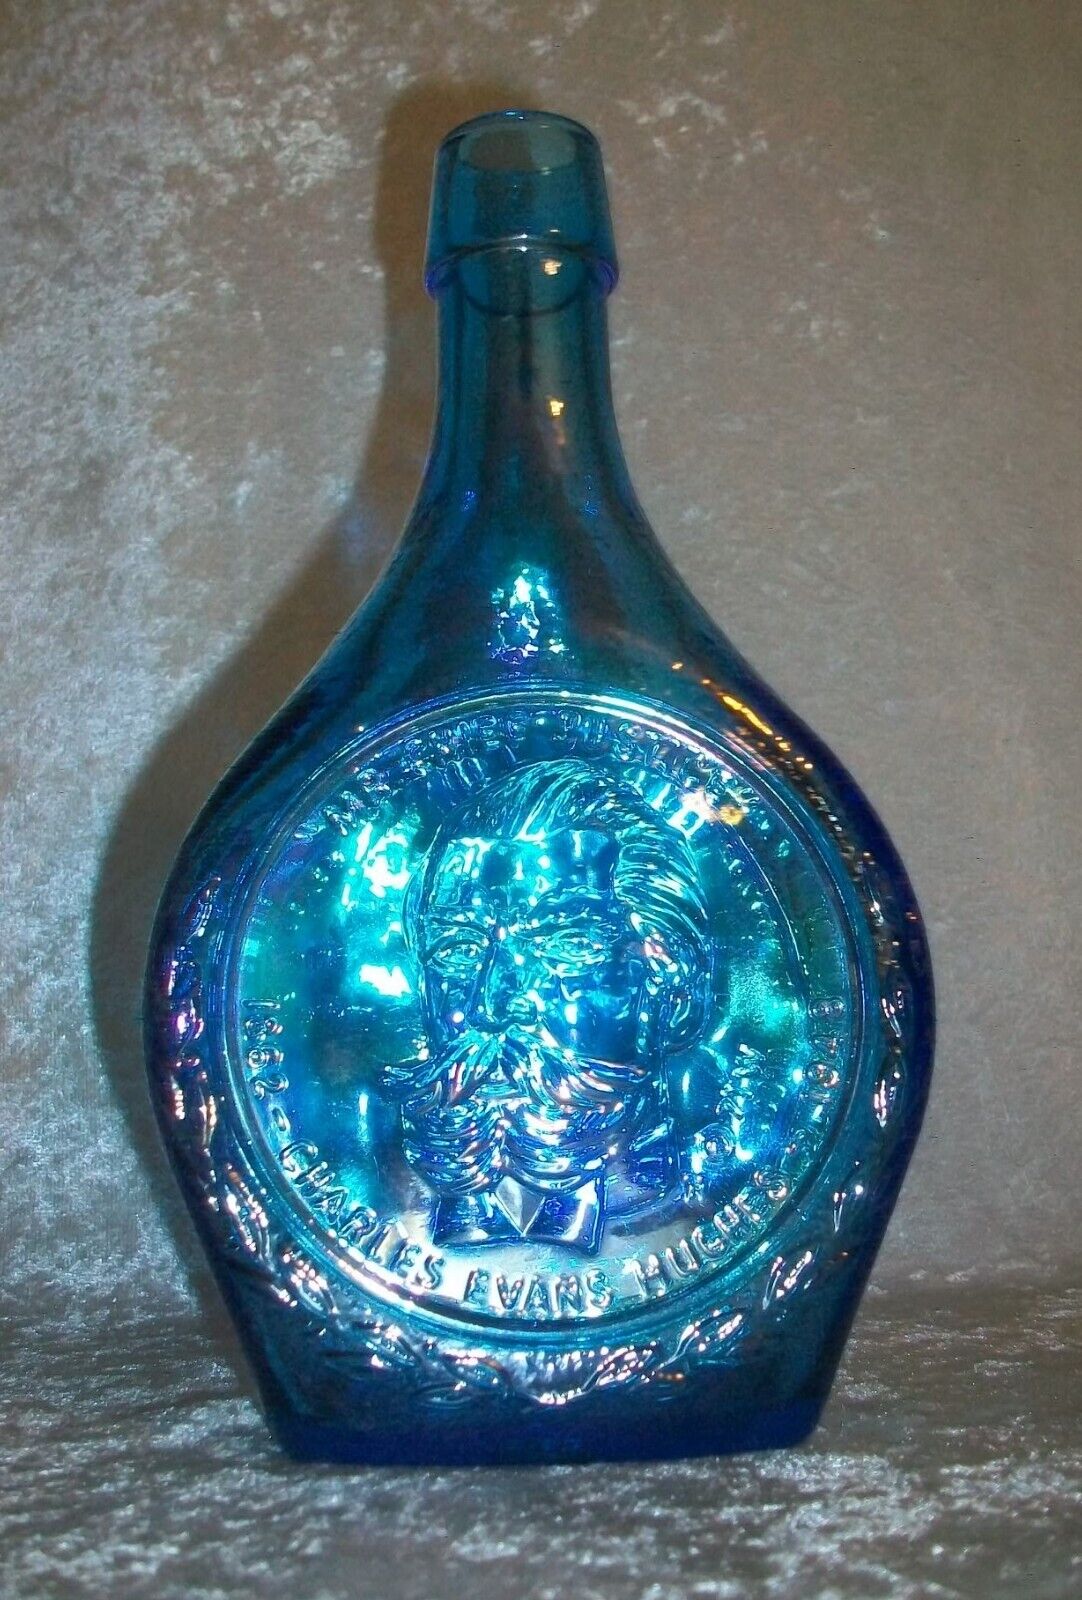 Vintage 1971 Wheaton Charles Evans Hughes Blue Iridescent Glass Decanter Bottle